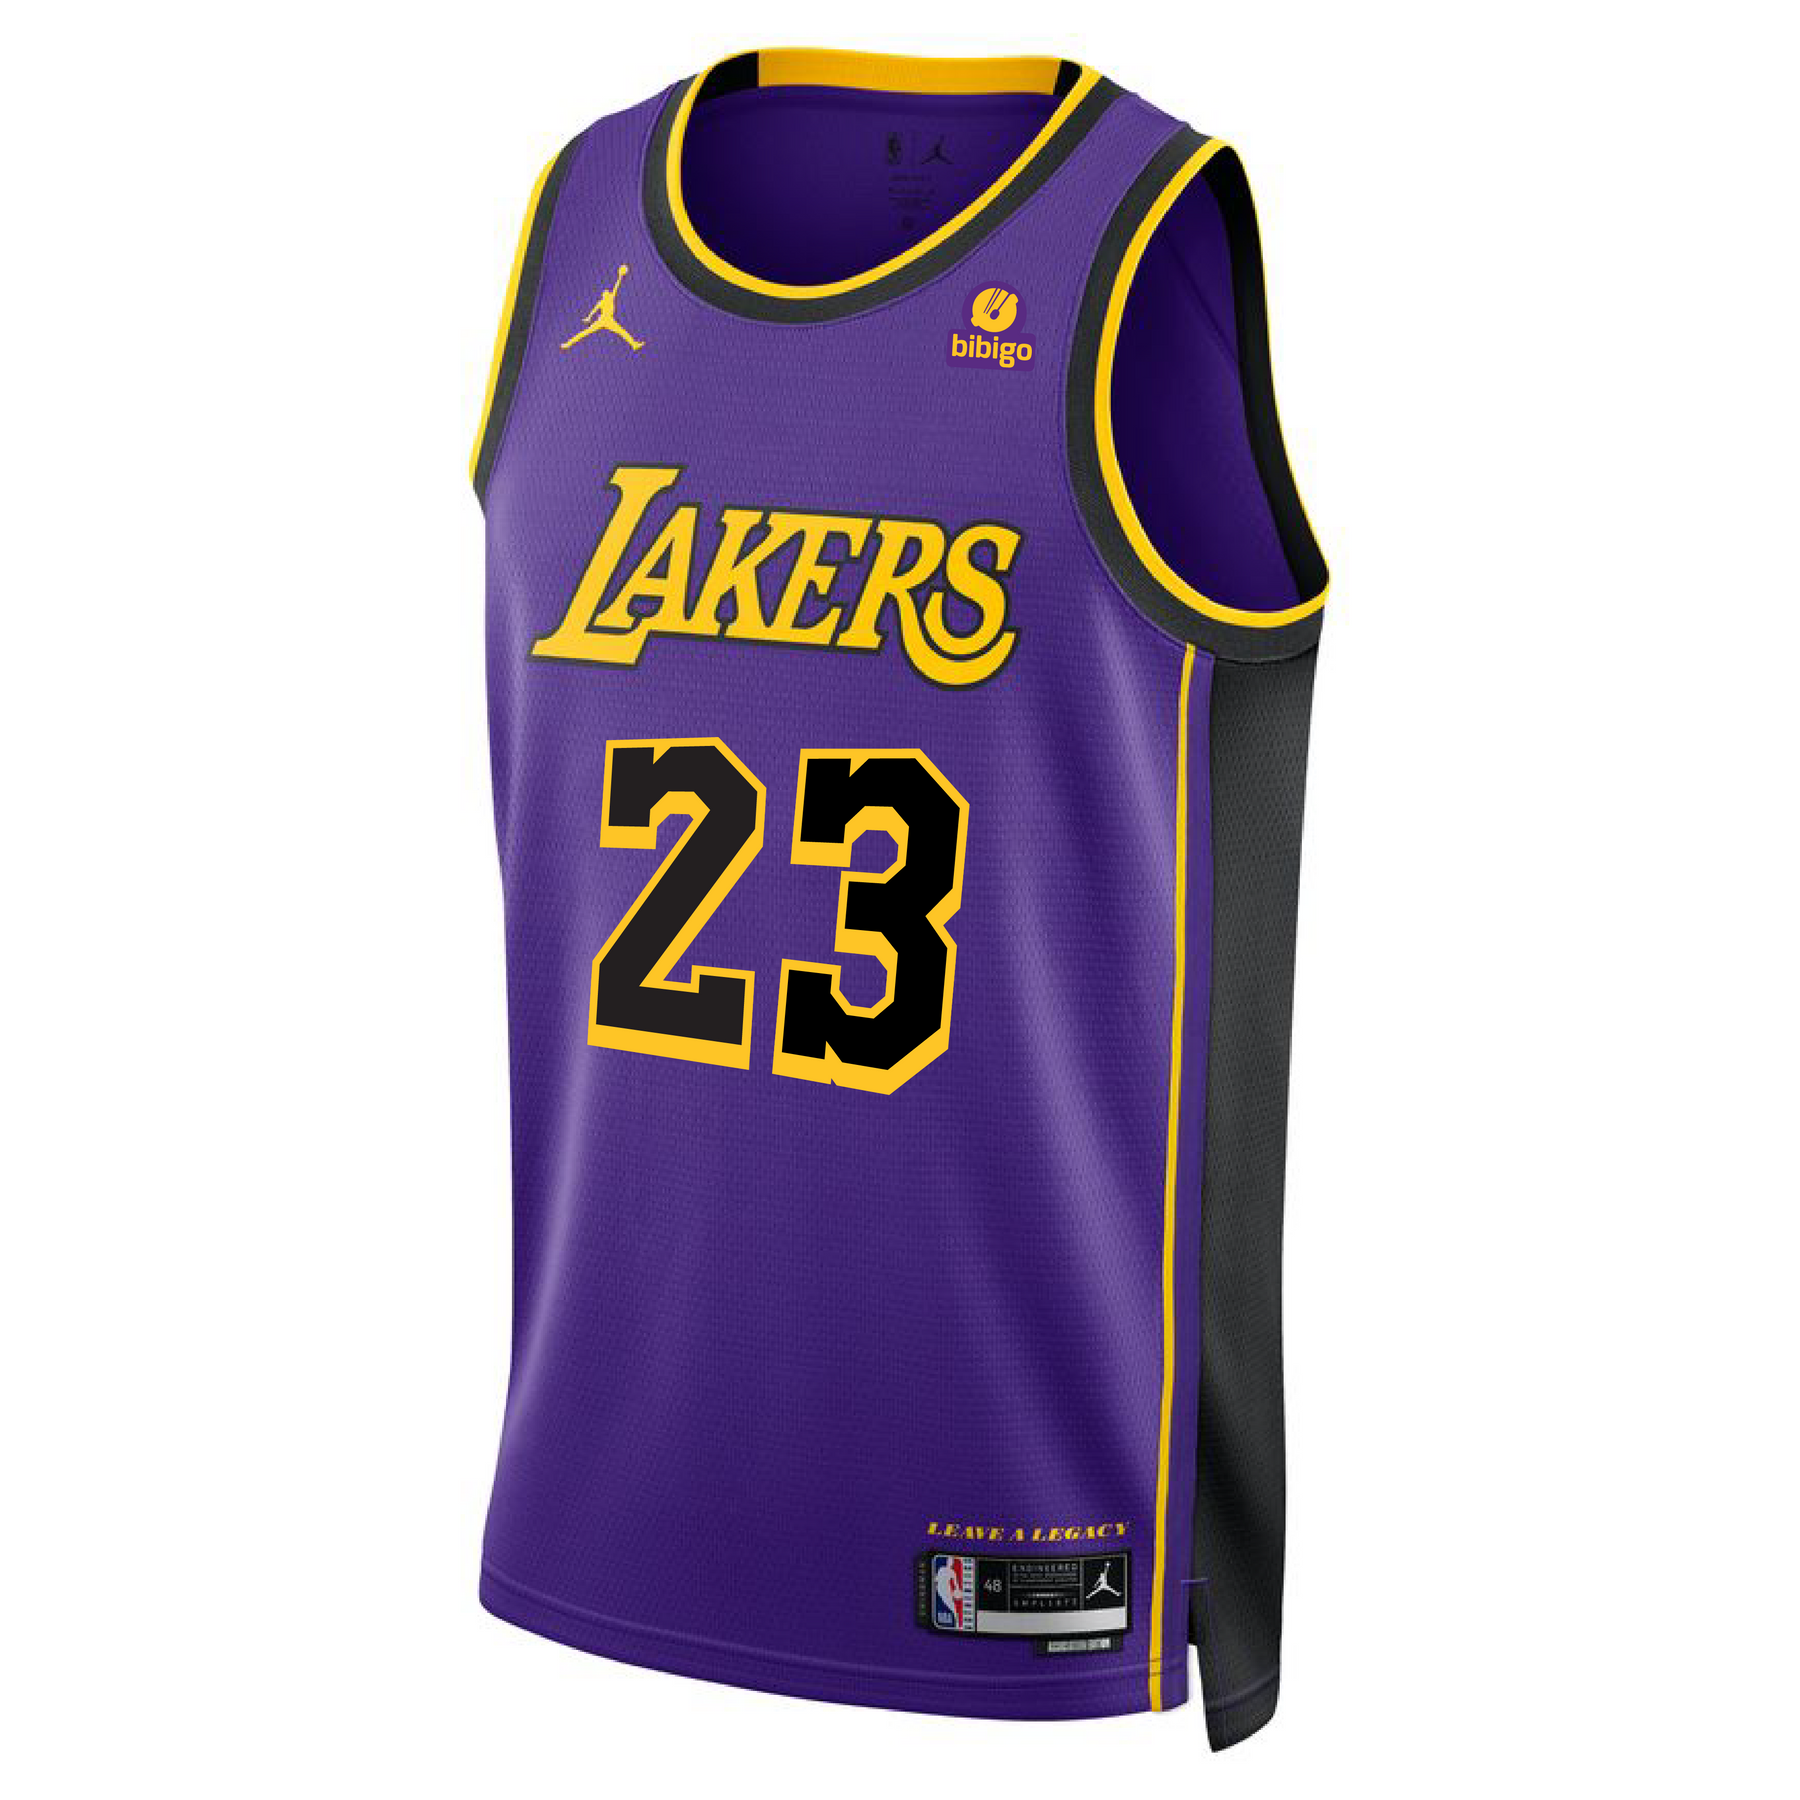 LeBron James #23 Lakers Nike T-Shirt Jersey, Size